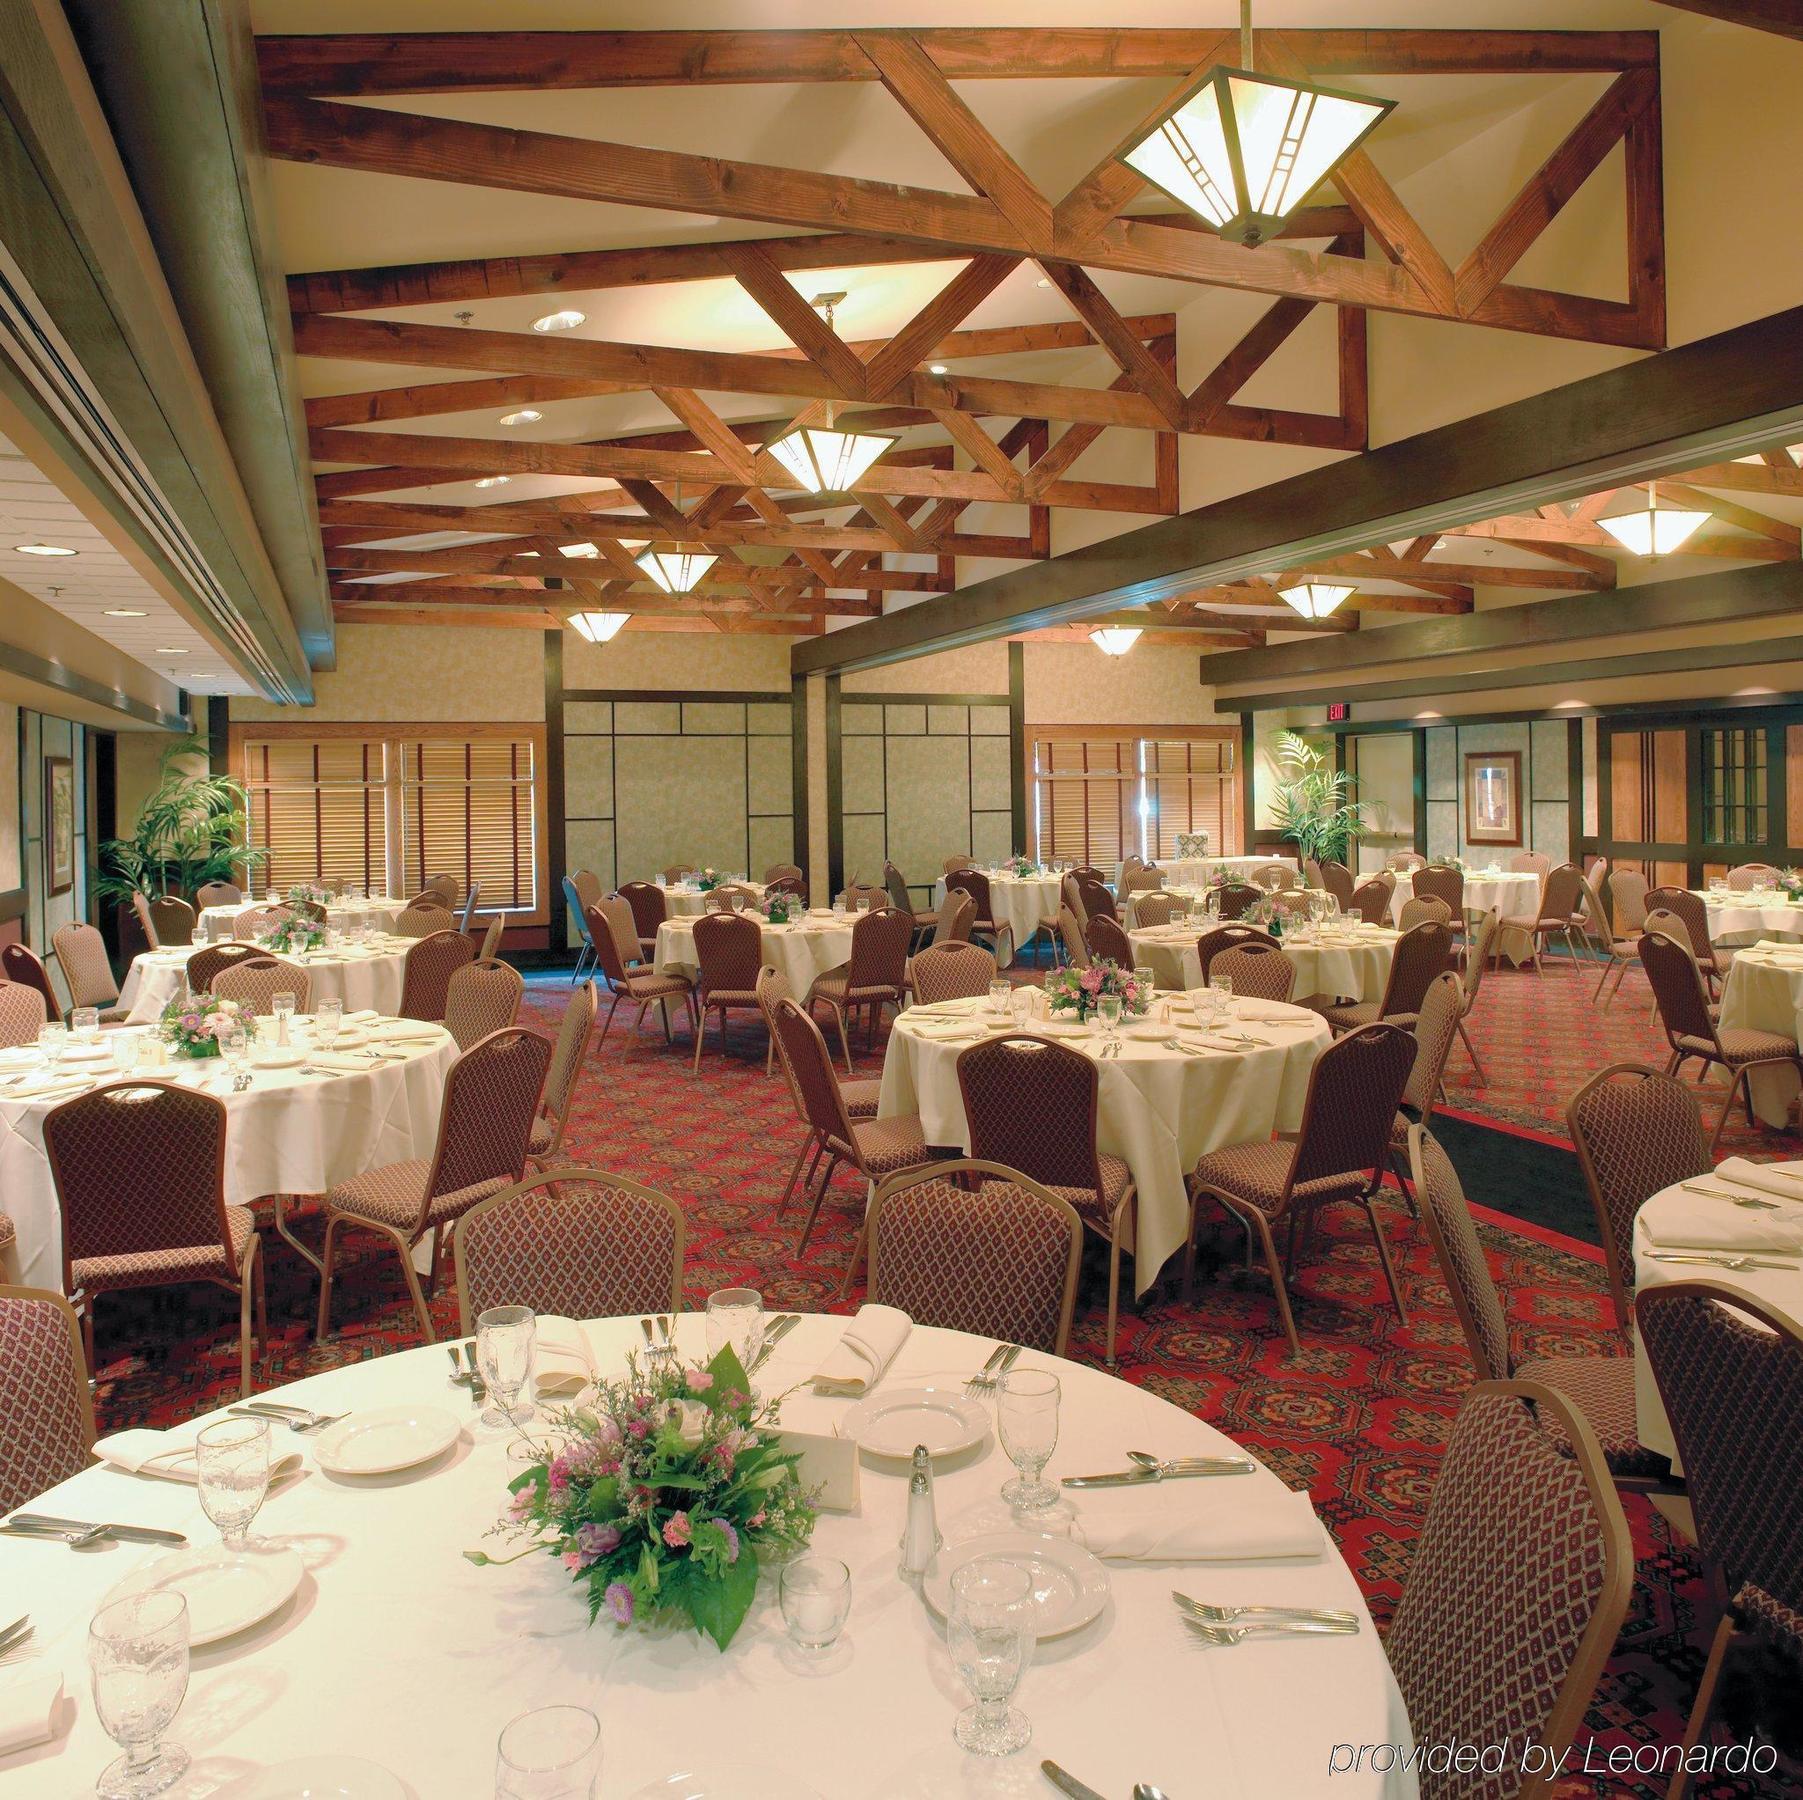 The Craftsman Inn & Suites Fayetteville Restaurant photo